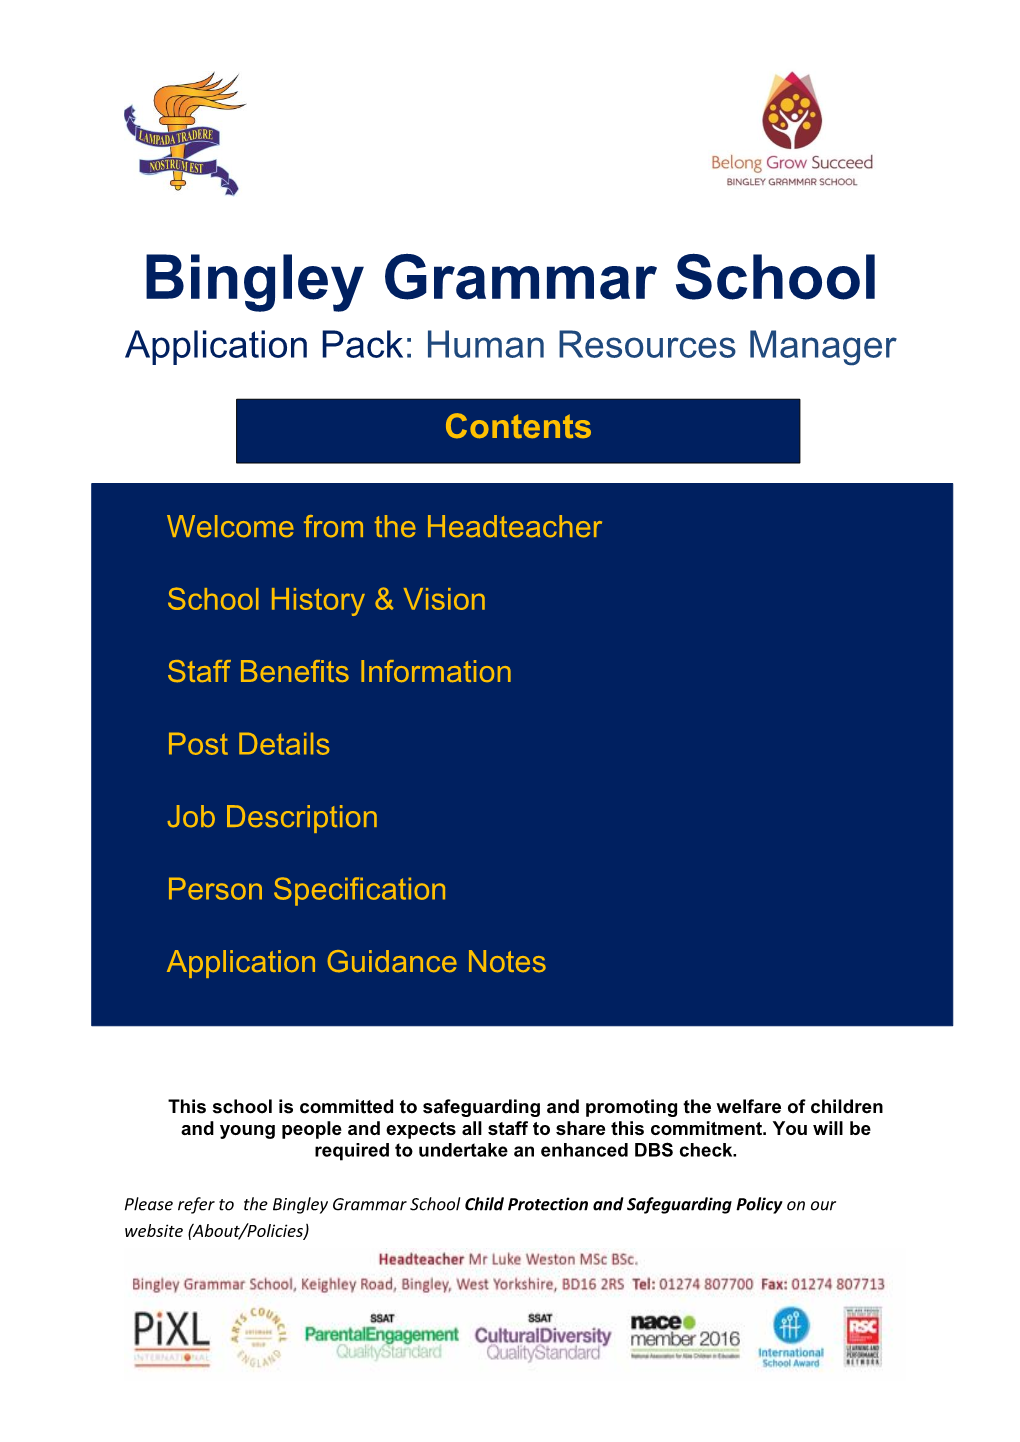 Bingley Grammar School Application Pack: Human Resources Manager